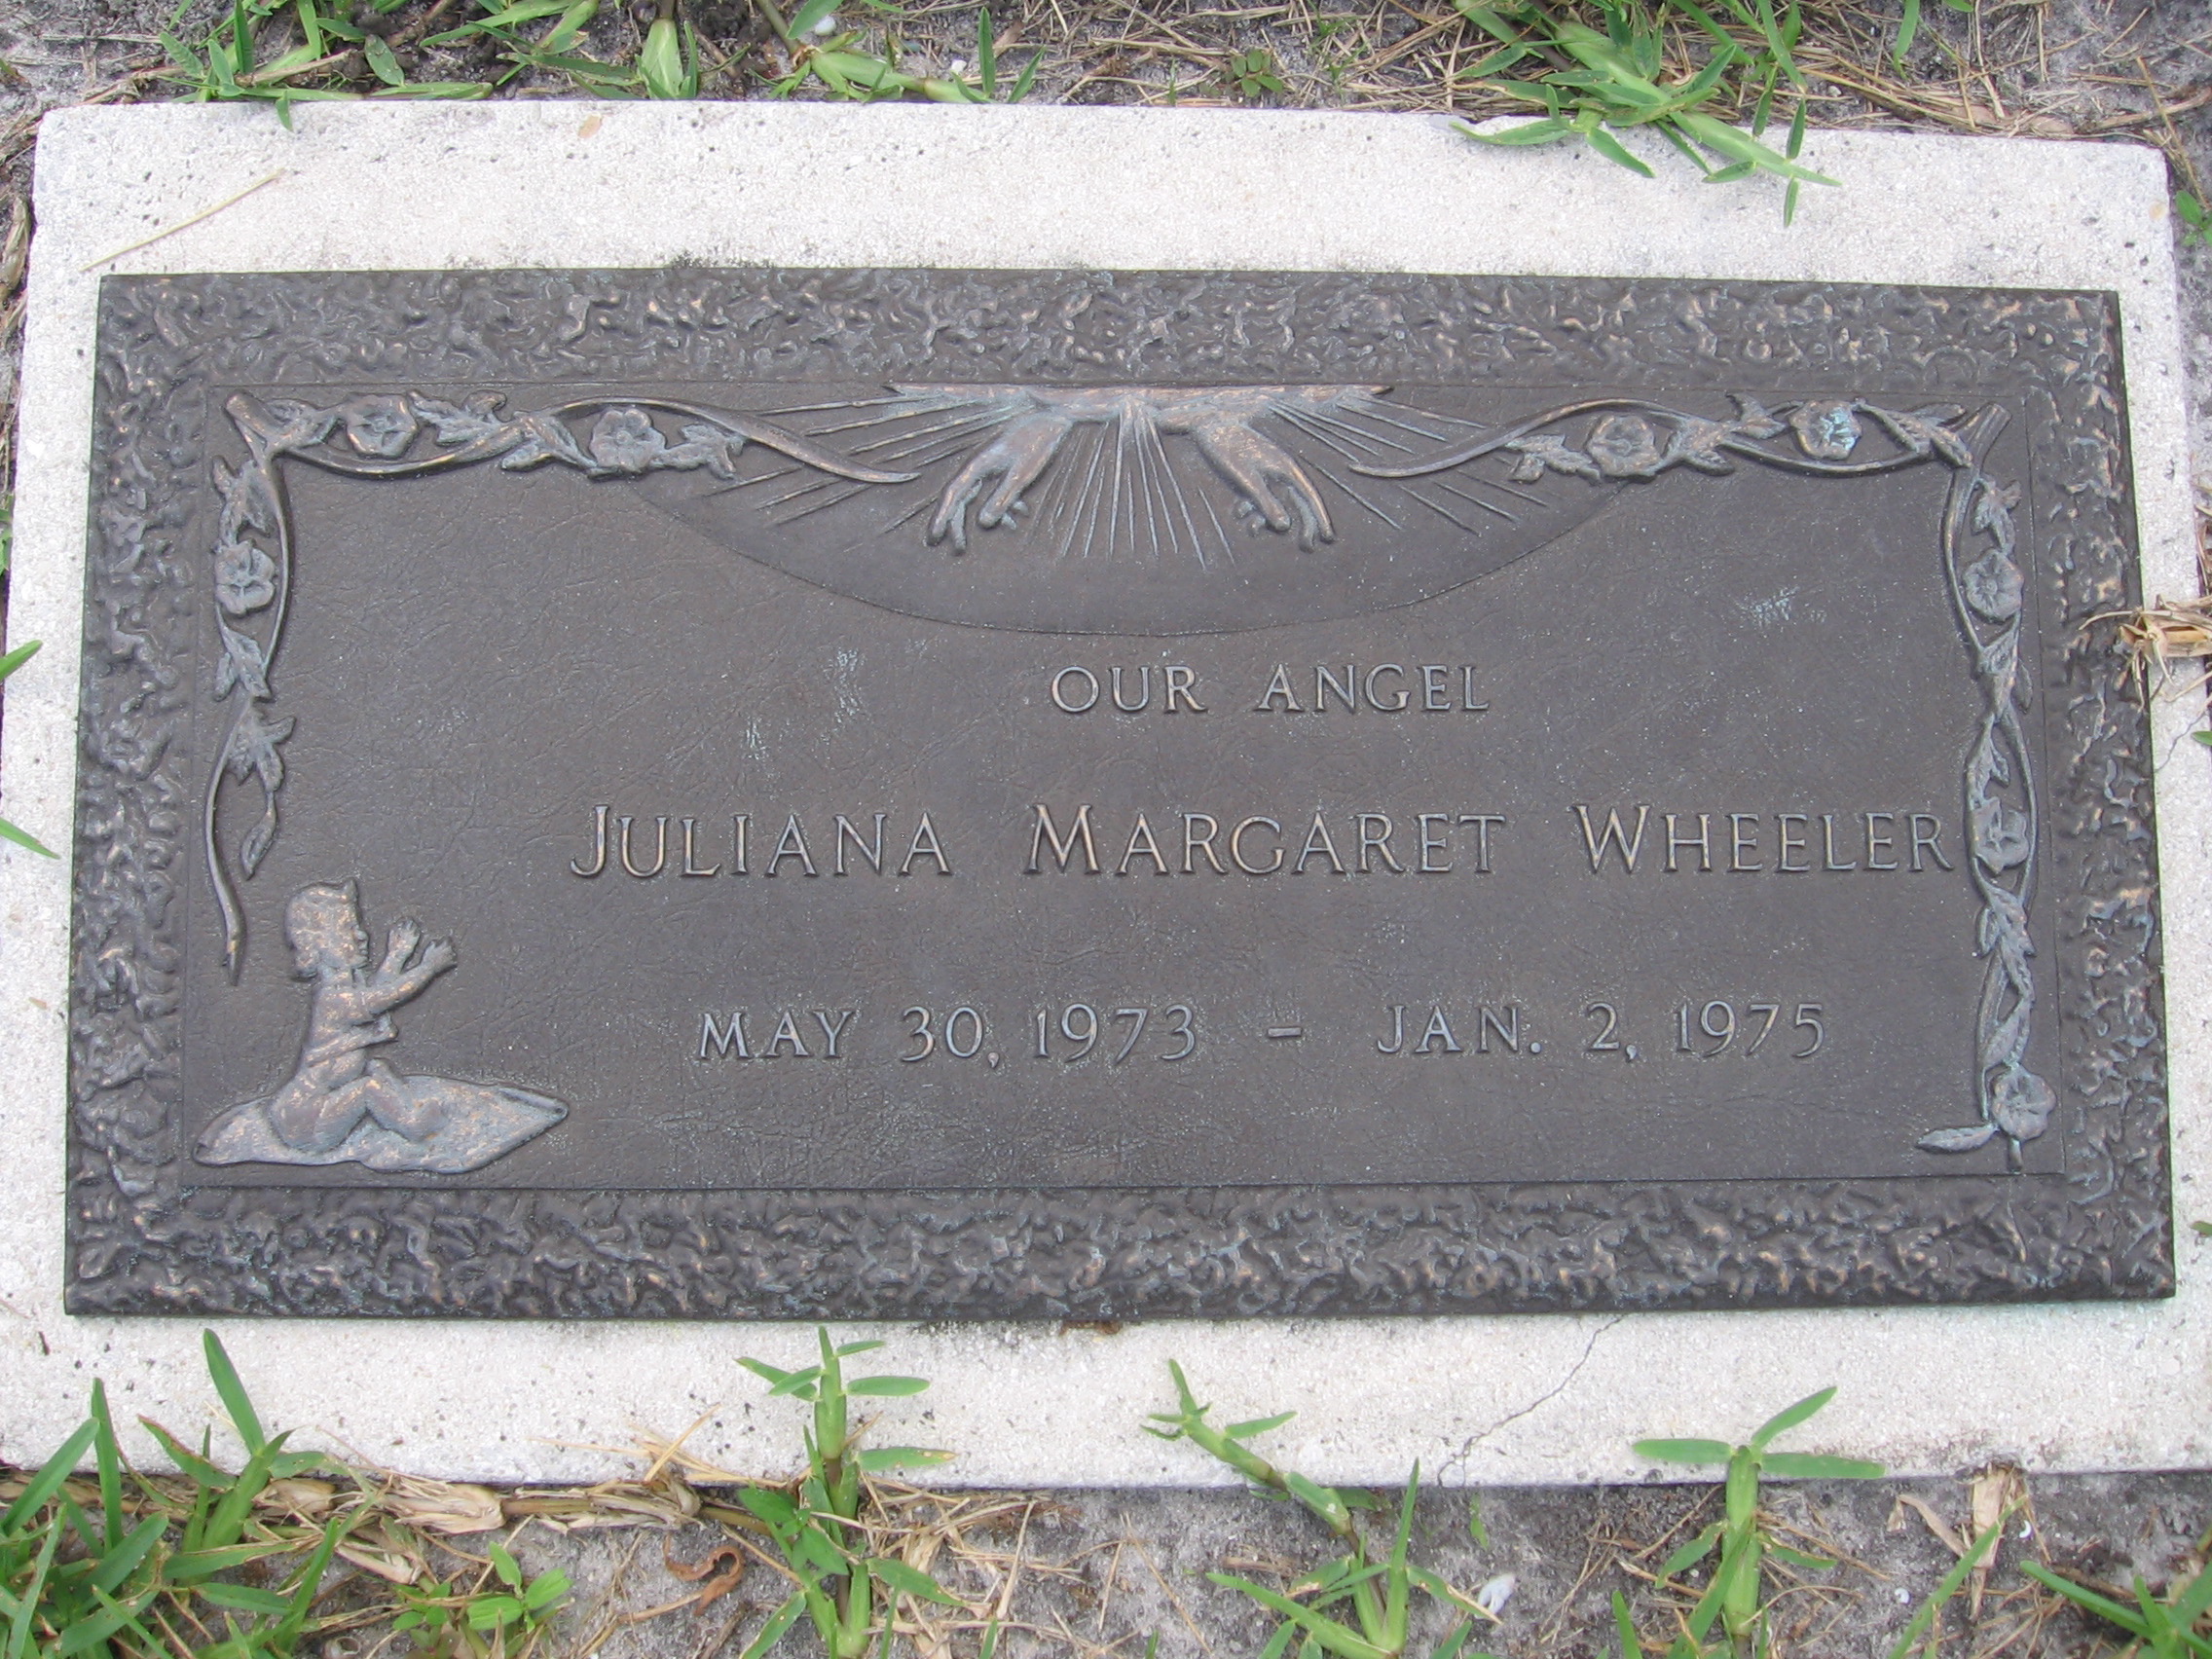 Juliana Margaret Wheeler